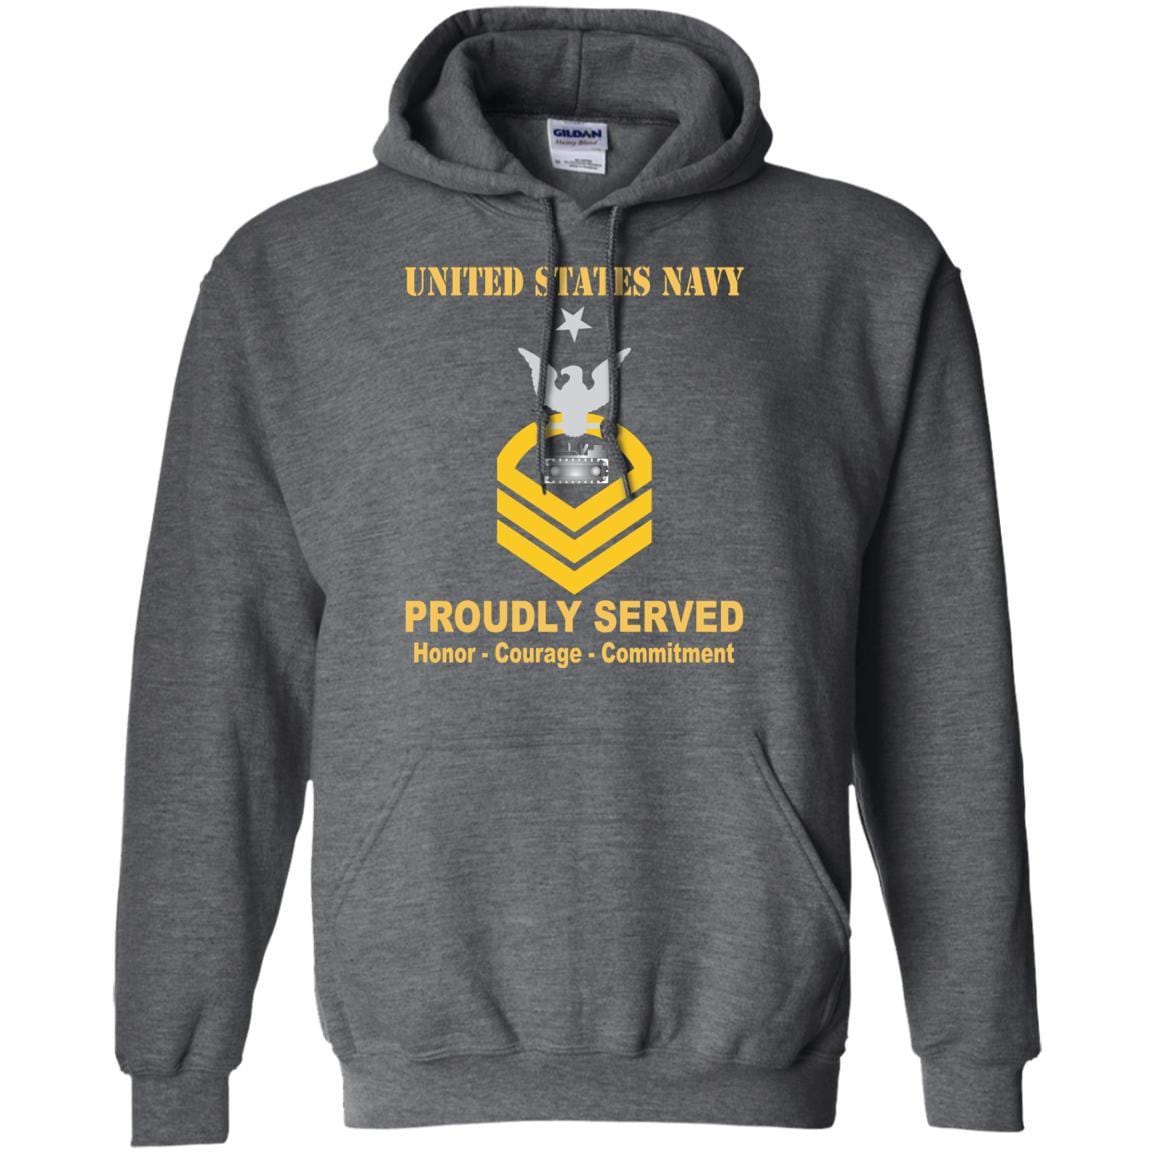 Navy Equipment Operator Navy EO E-8 Rating Badges Proudly Served T-Shirt For Men On Front-TShirt-Navy-Veterans Nation